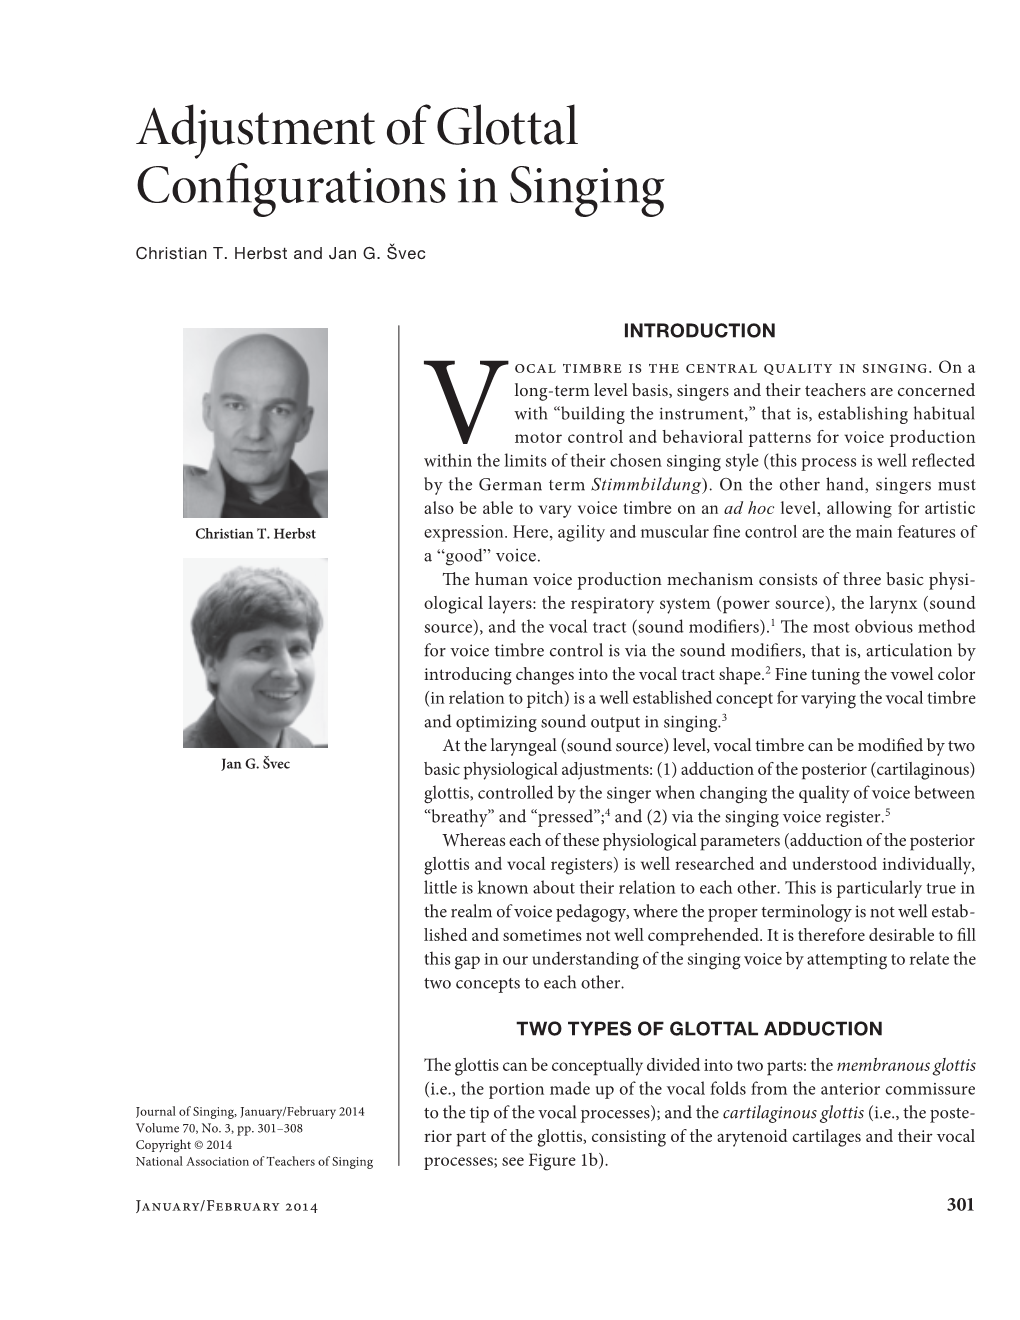 Adjustment of Glottal Configurations in Singing